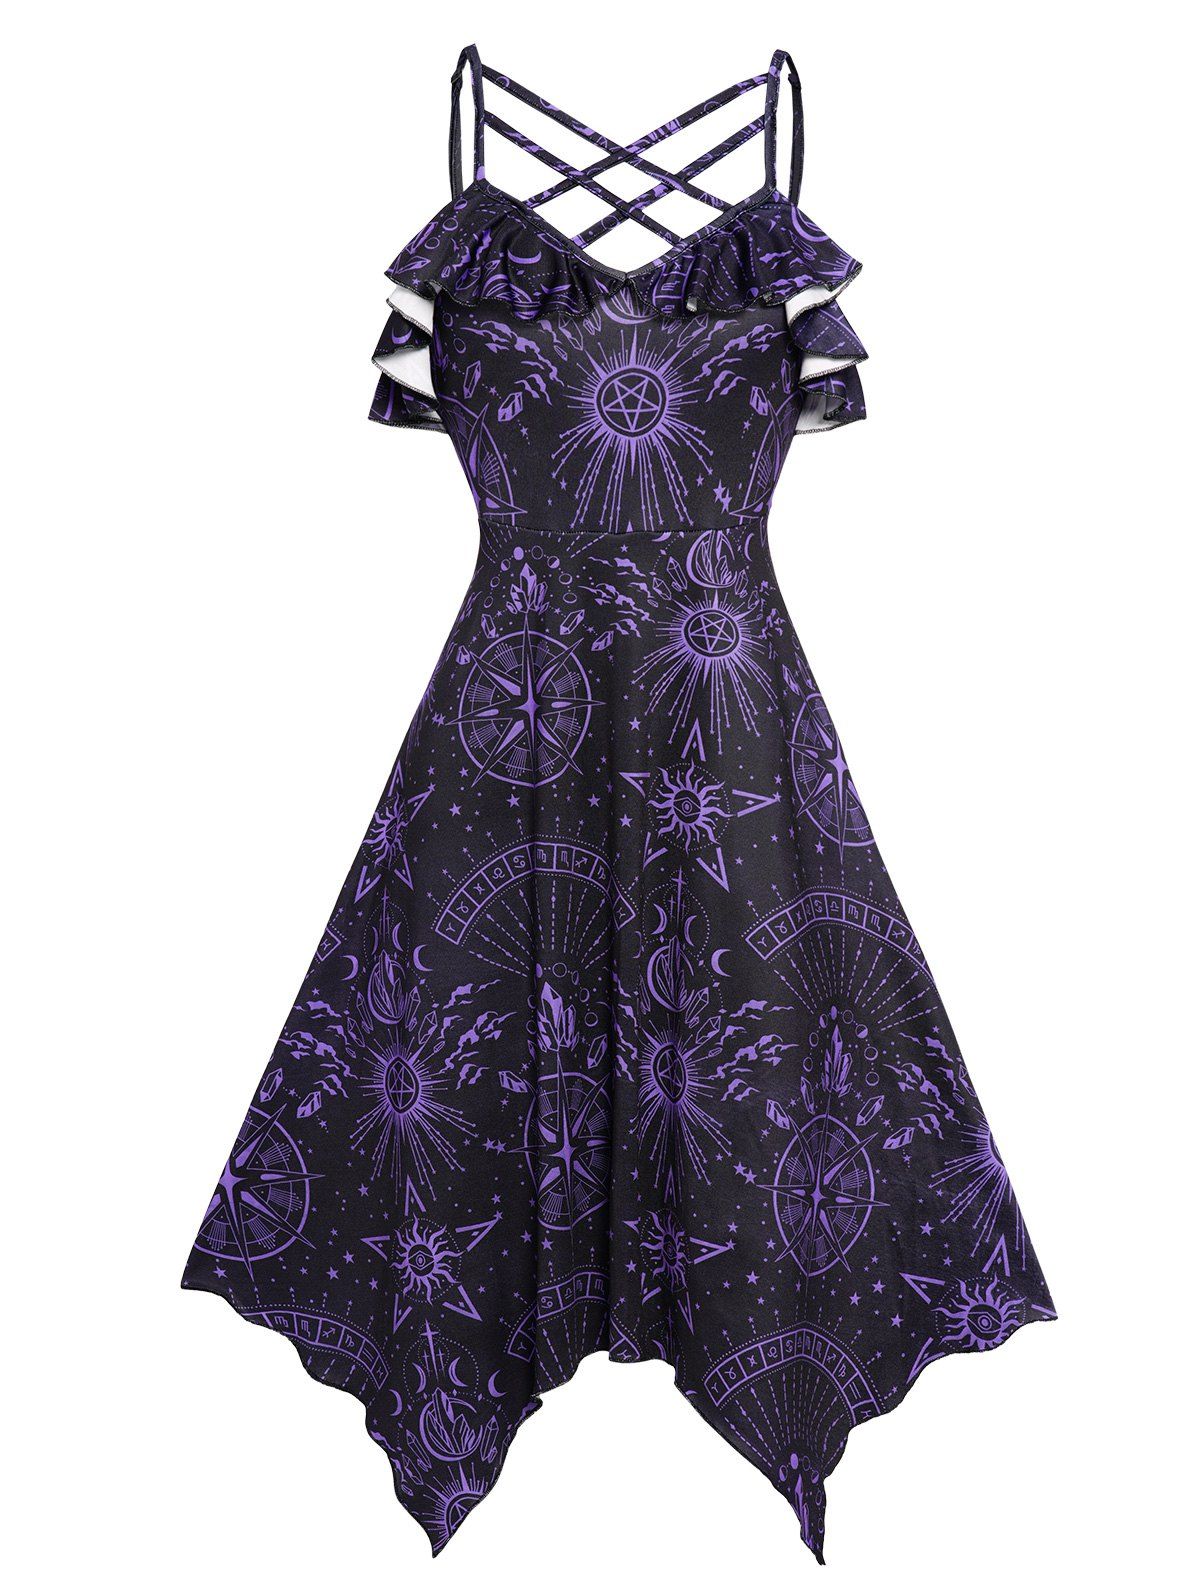 Sun Printed Dress Lattice Strap Sleeveless Foldover High Waisted Asymmetrical Midi Dress - CONCORD S